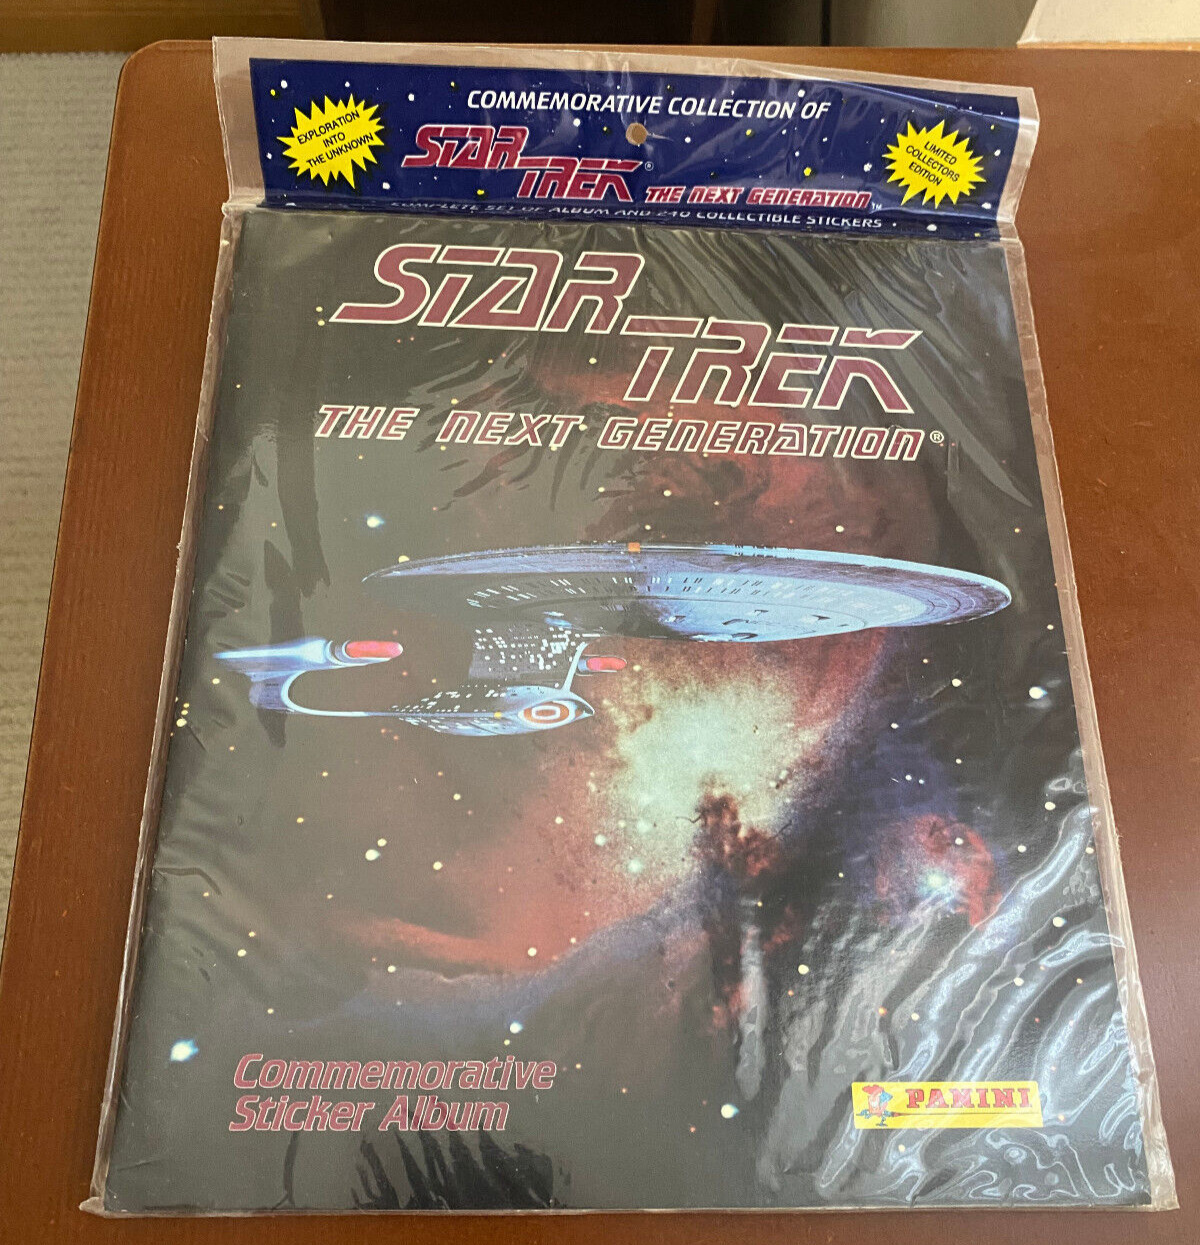 1993 Panini Star Trek The Next Generation Commemorative Sticker Album - Sealed